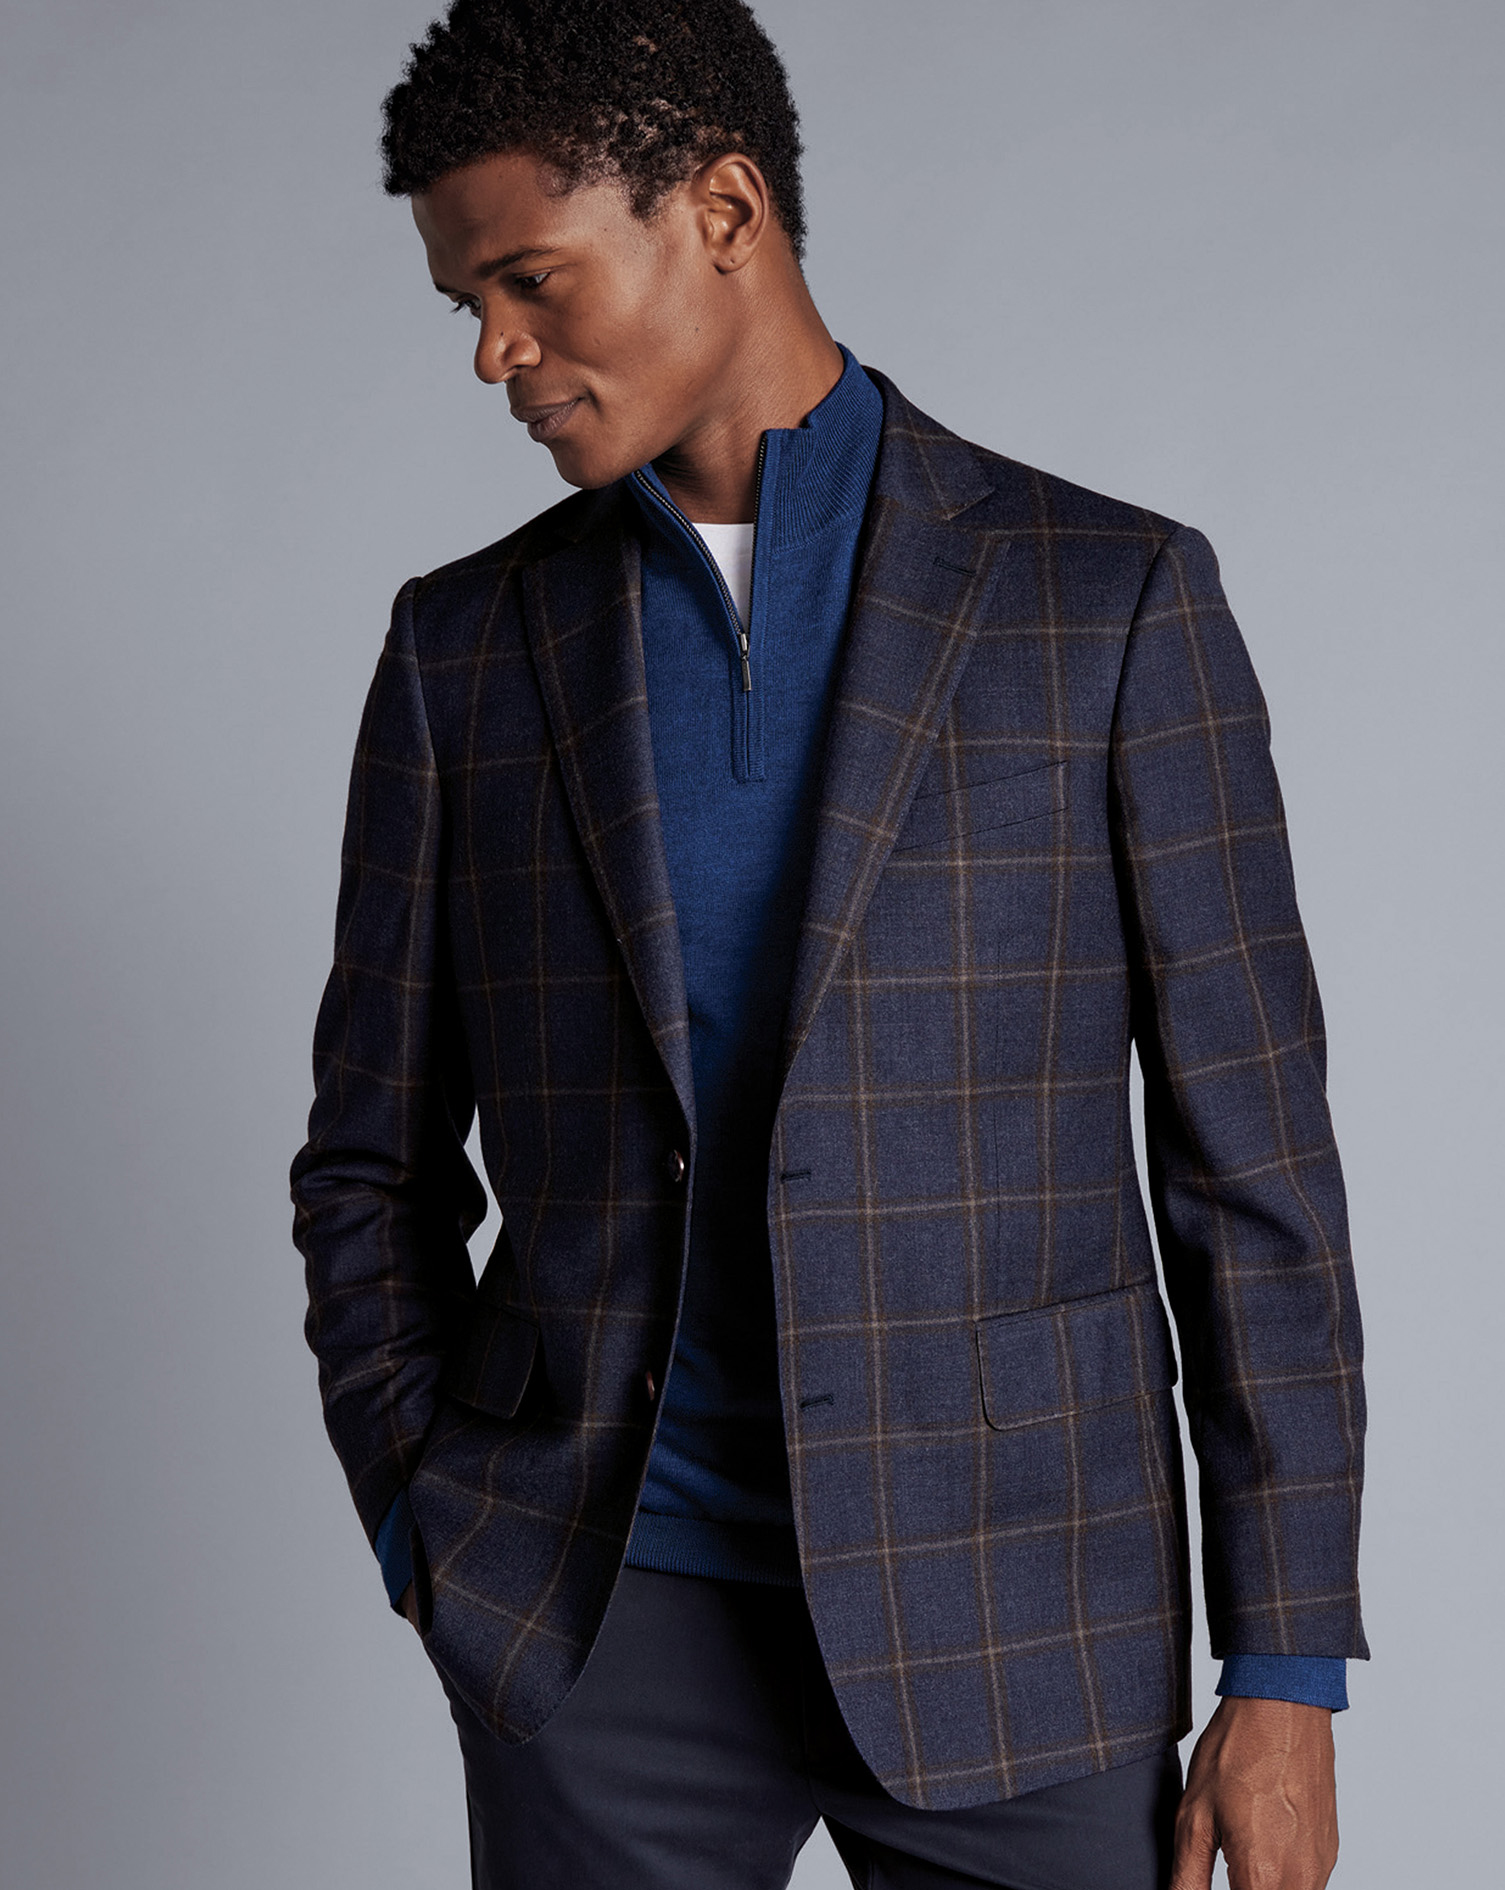 Men's Charles Tyrwhitt Checkered Windowpane Texture na Jacket - Steel Blue Size 38R Wool
